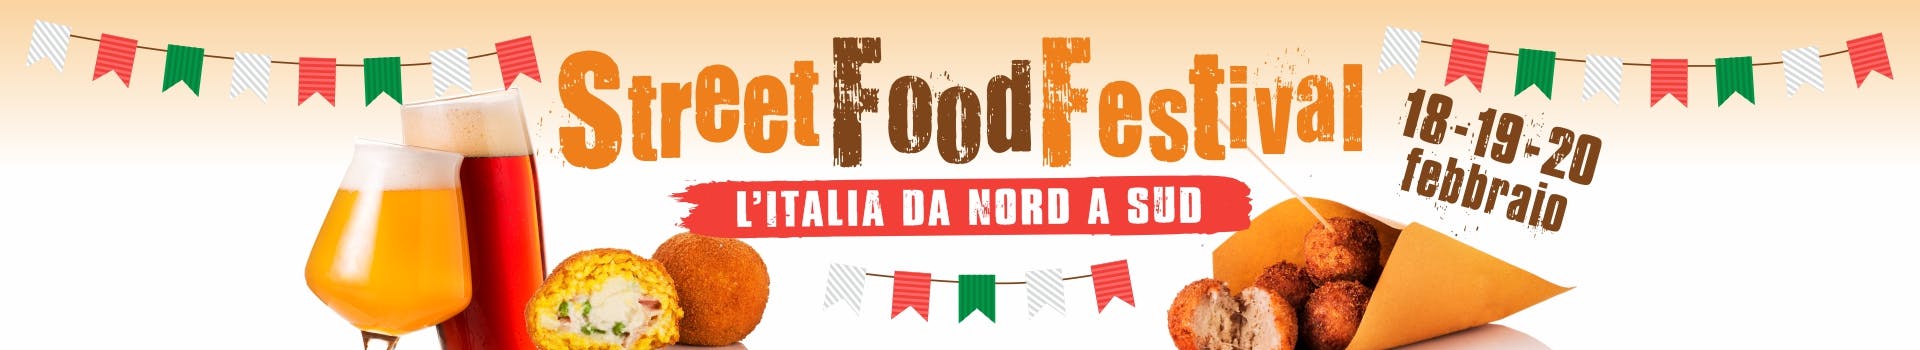 Street Food Festival Eataly Roma